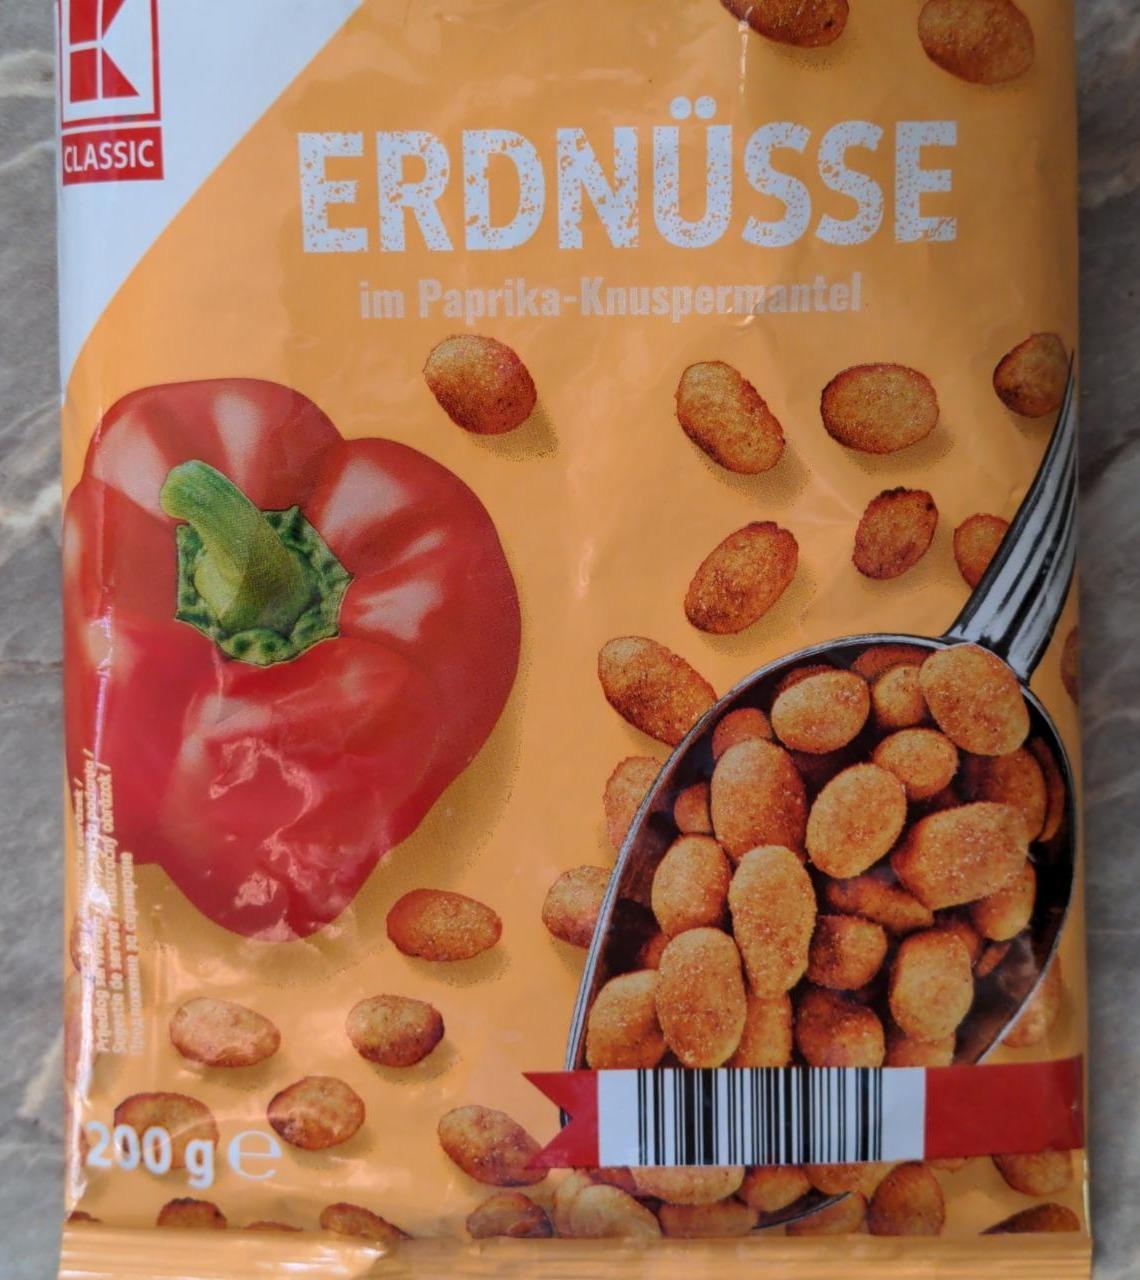 Fotografie - Erdnüsse im Paprika-Knuspermantel K-Classic